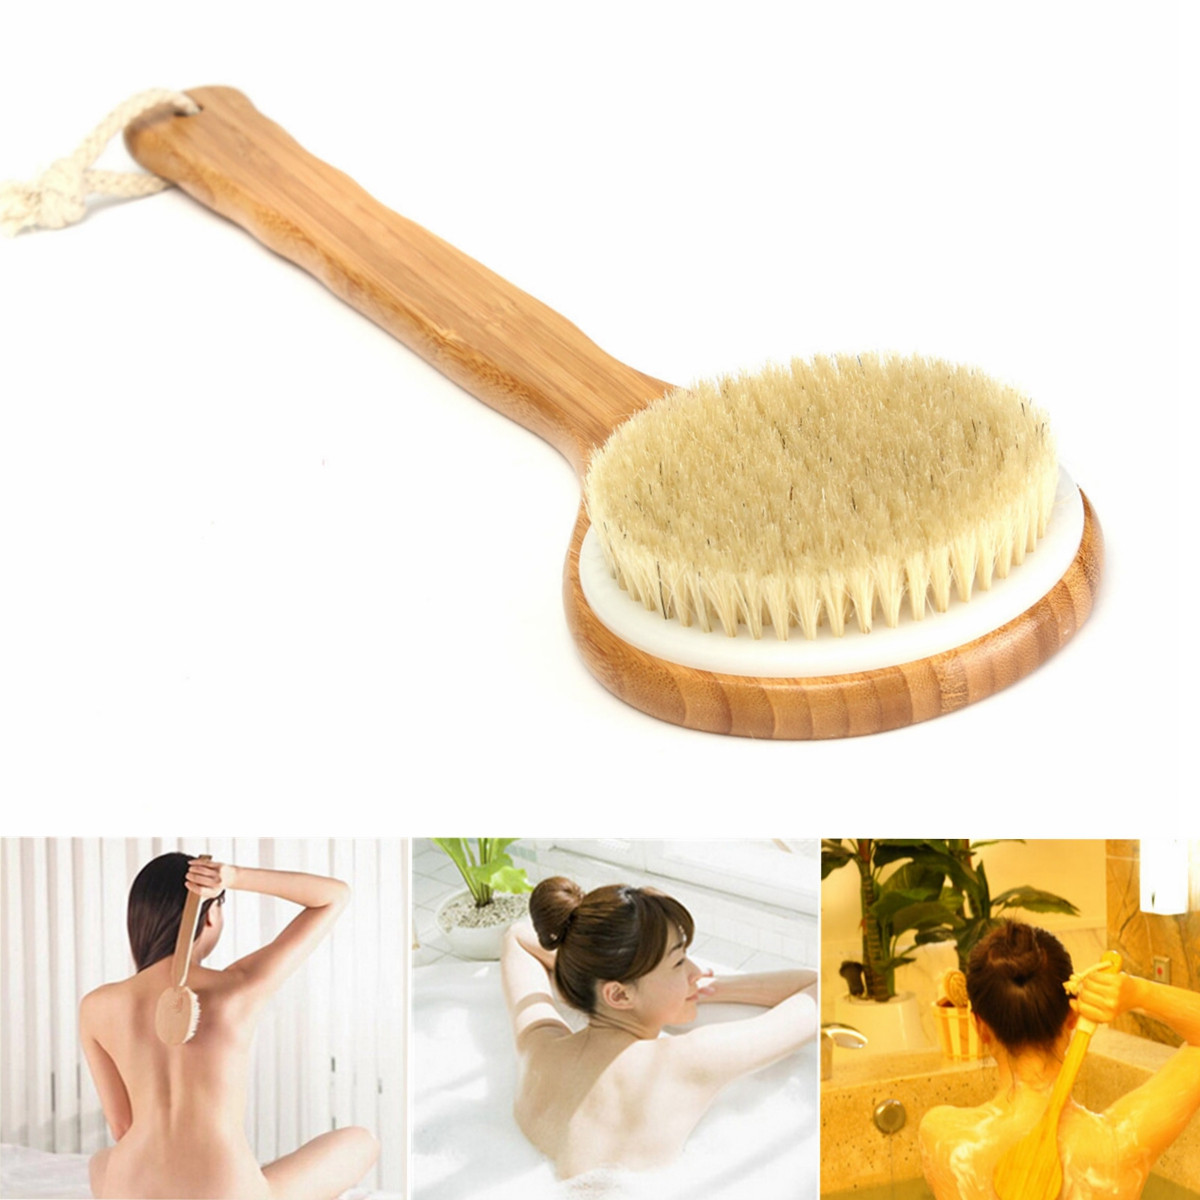 Wrvxzio 15.7" Bath Brush Natural Bristle Exfoliating Shower Brush Wooden Brush Back Body Massager Shower Skin Spa - image 1 of 7